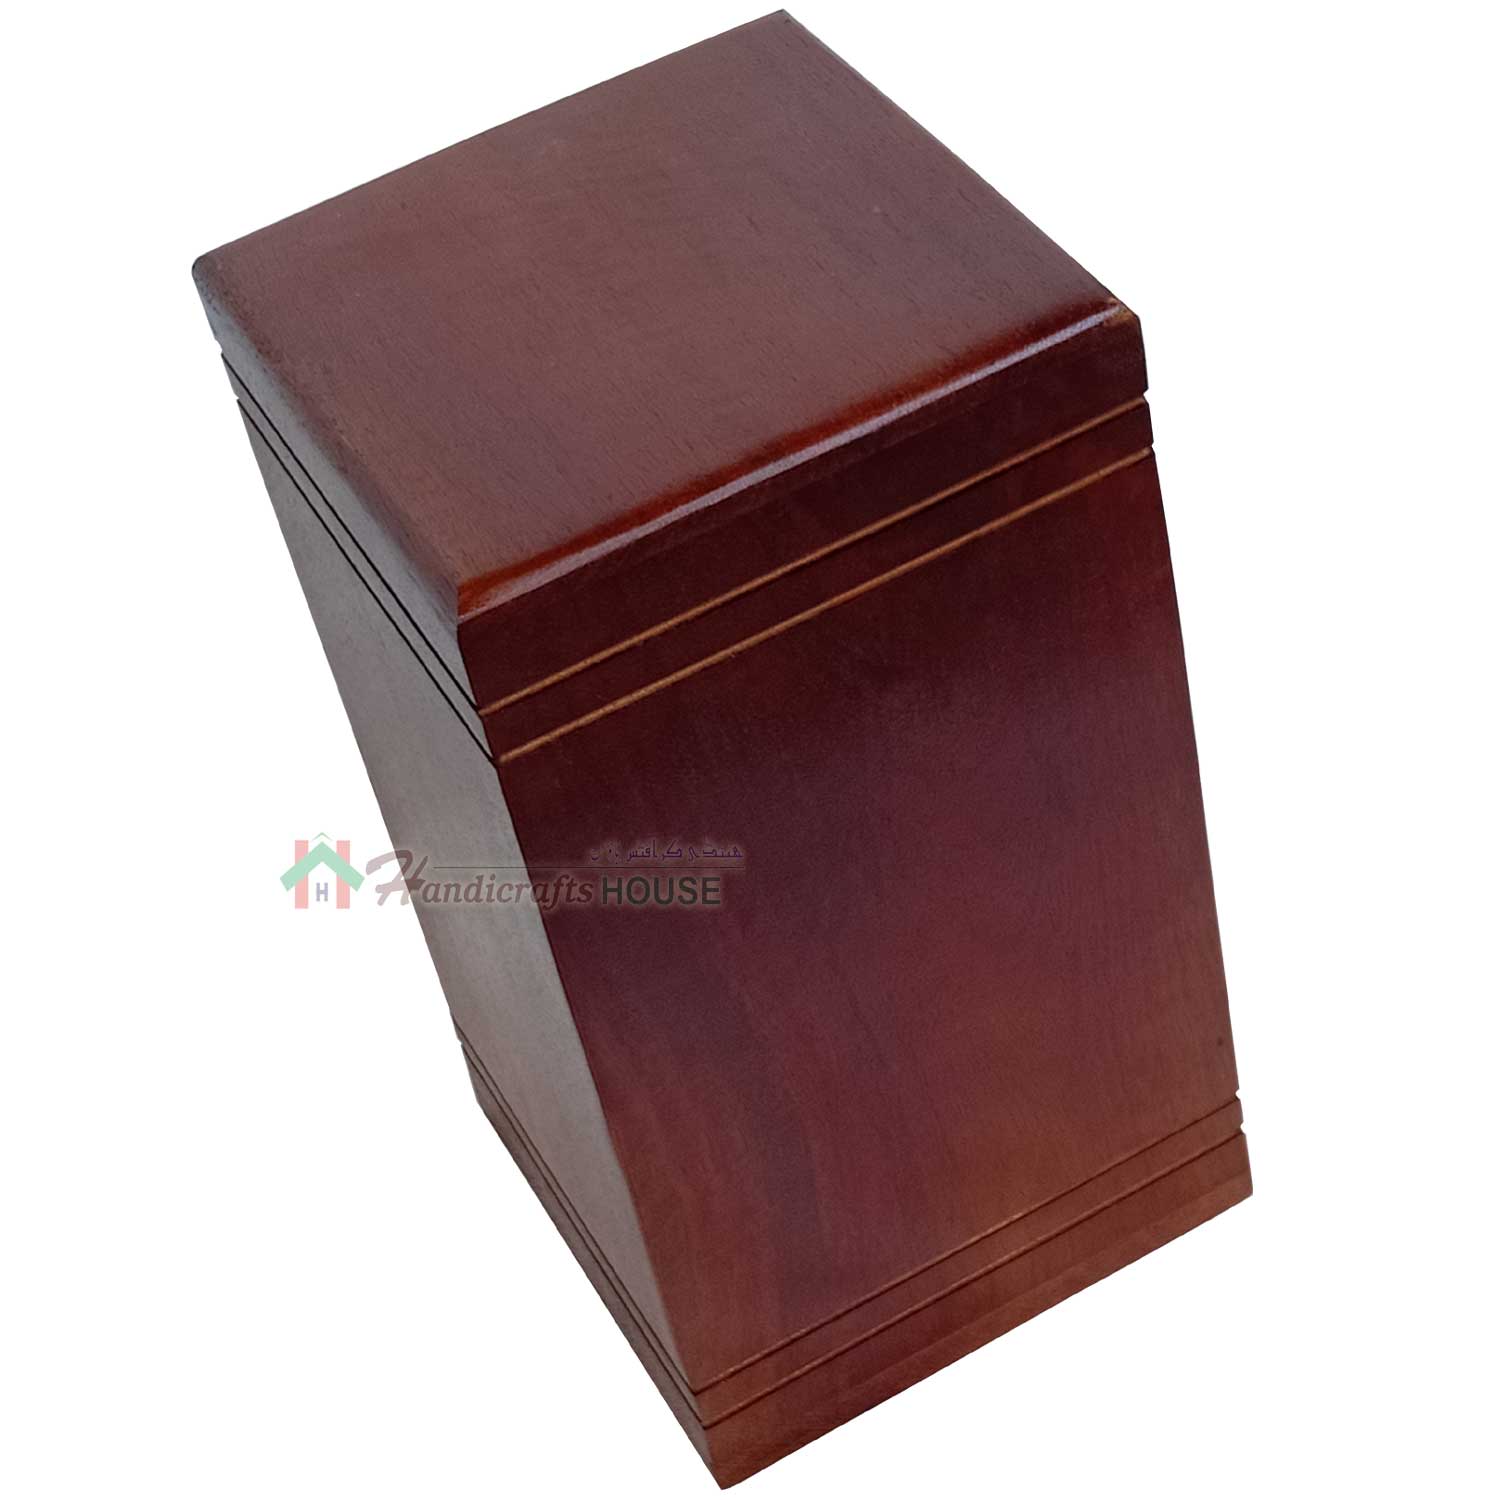 Rosewood Urns for Human Ashes, Funeral Cremation Urn - Burial Keepsake – Memorial Wood Box 12 Cu/inc